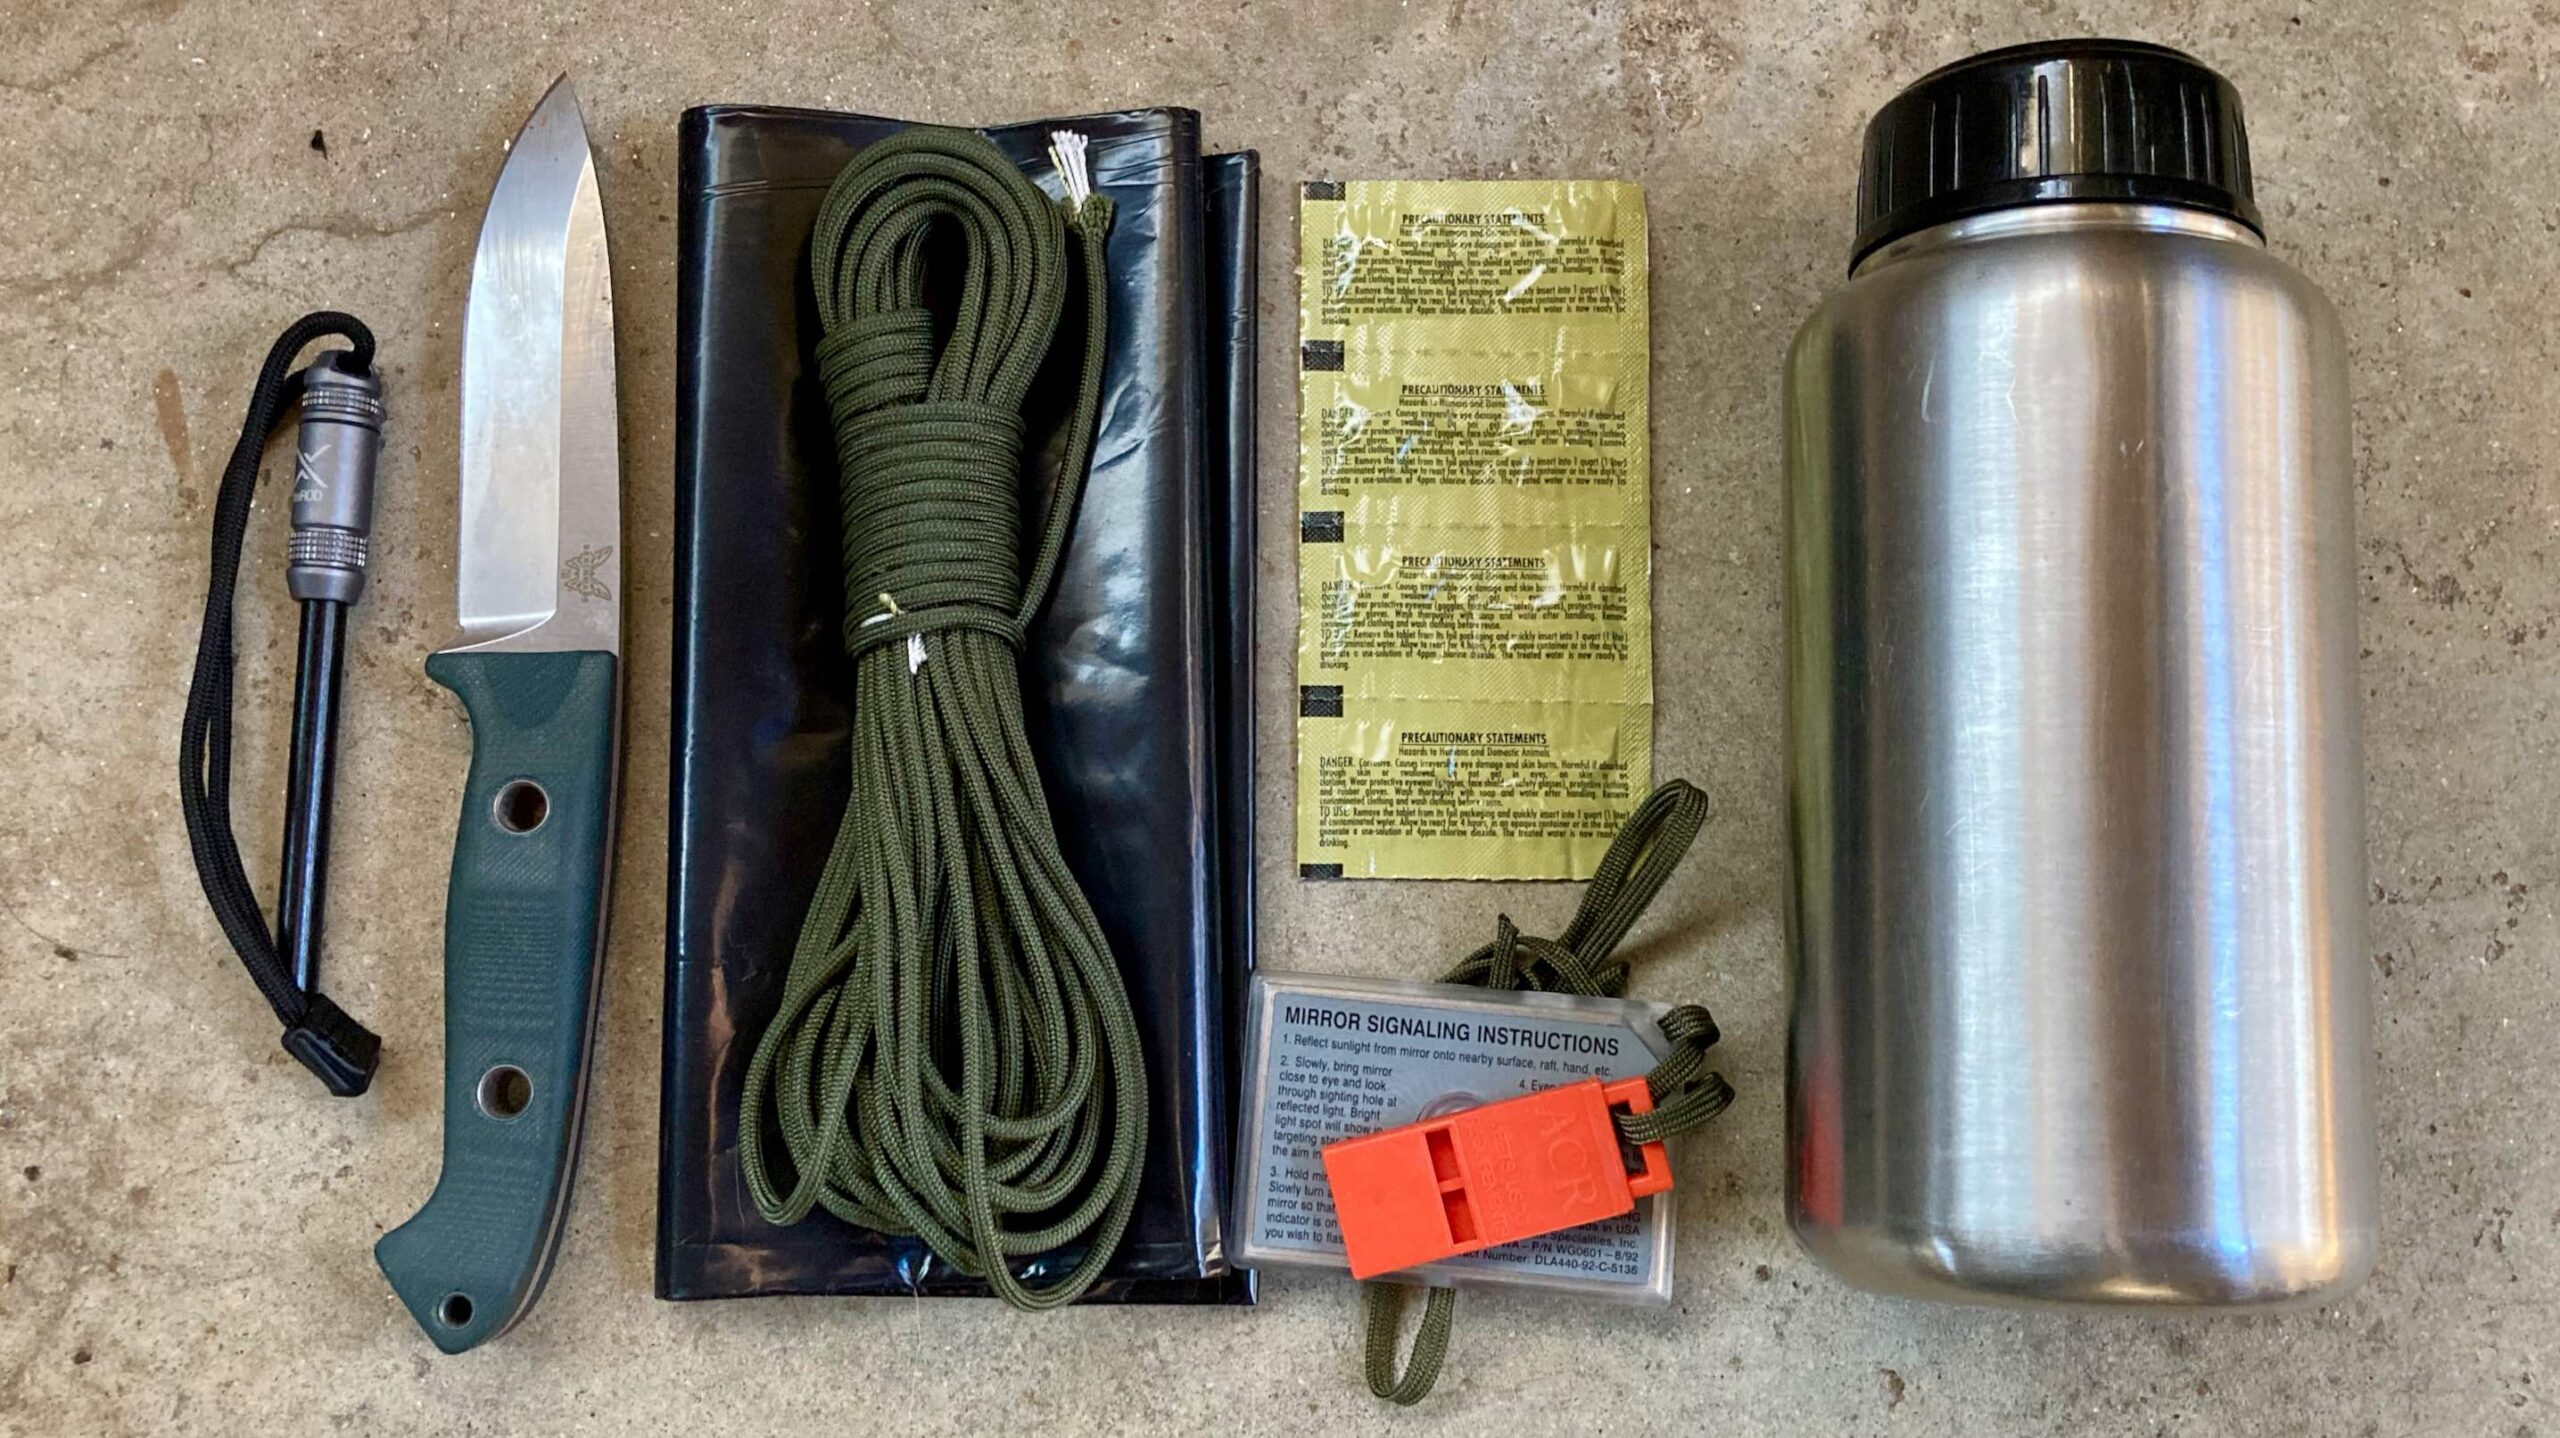 Bushcraft Survival Fire & Water Kit